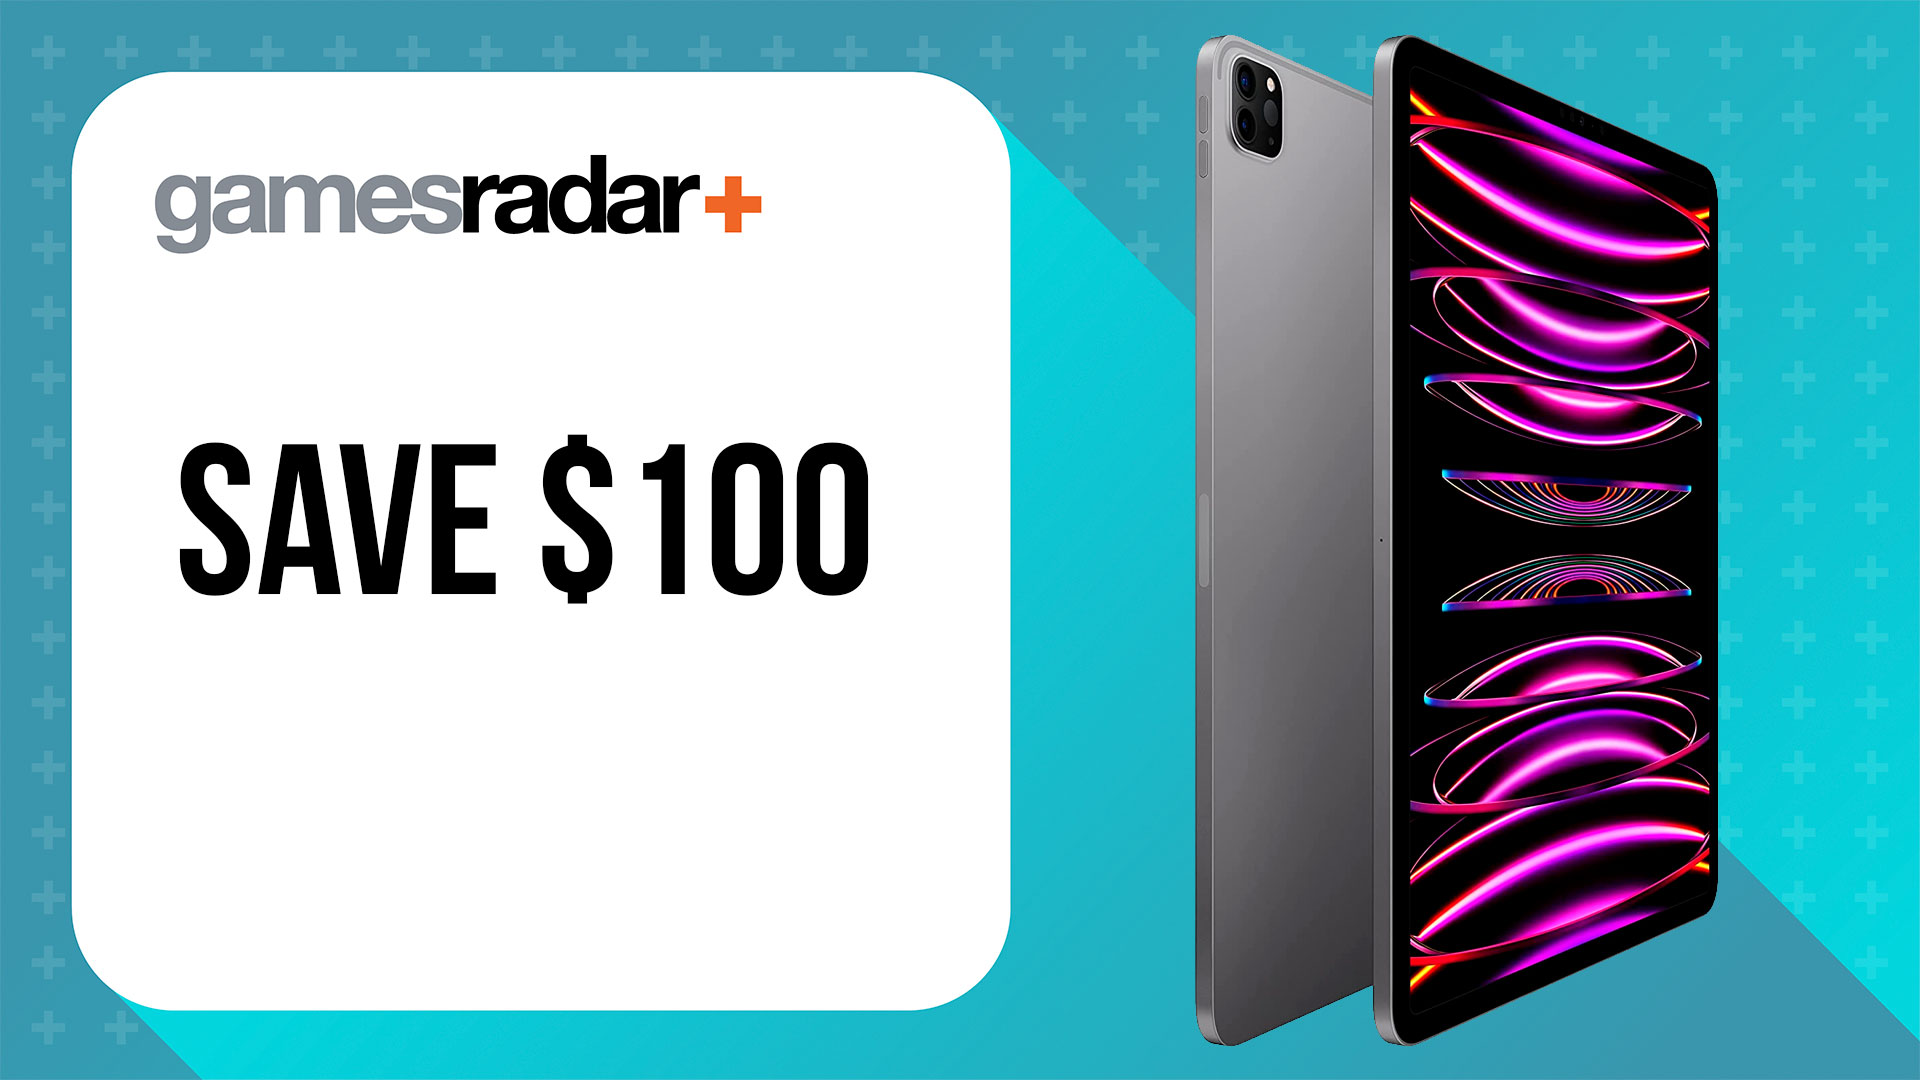 2022 iPad Pro 12.9-inch deal - $100 off